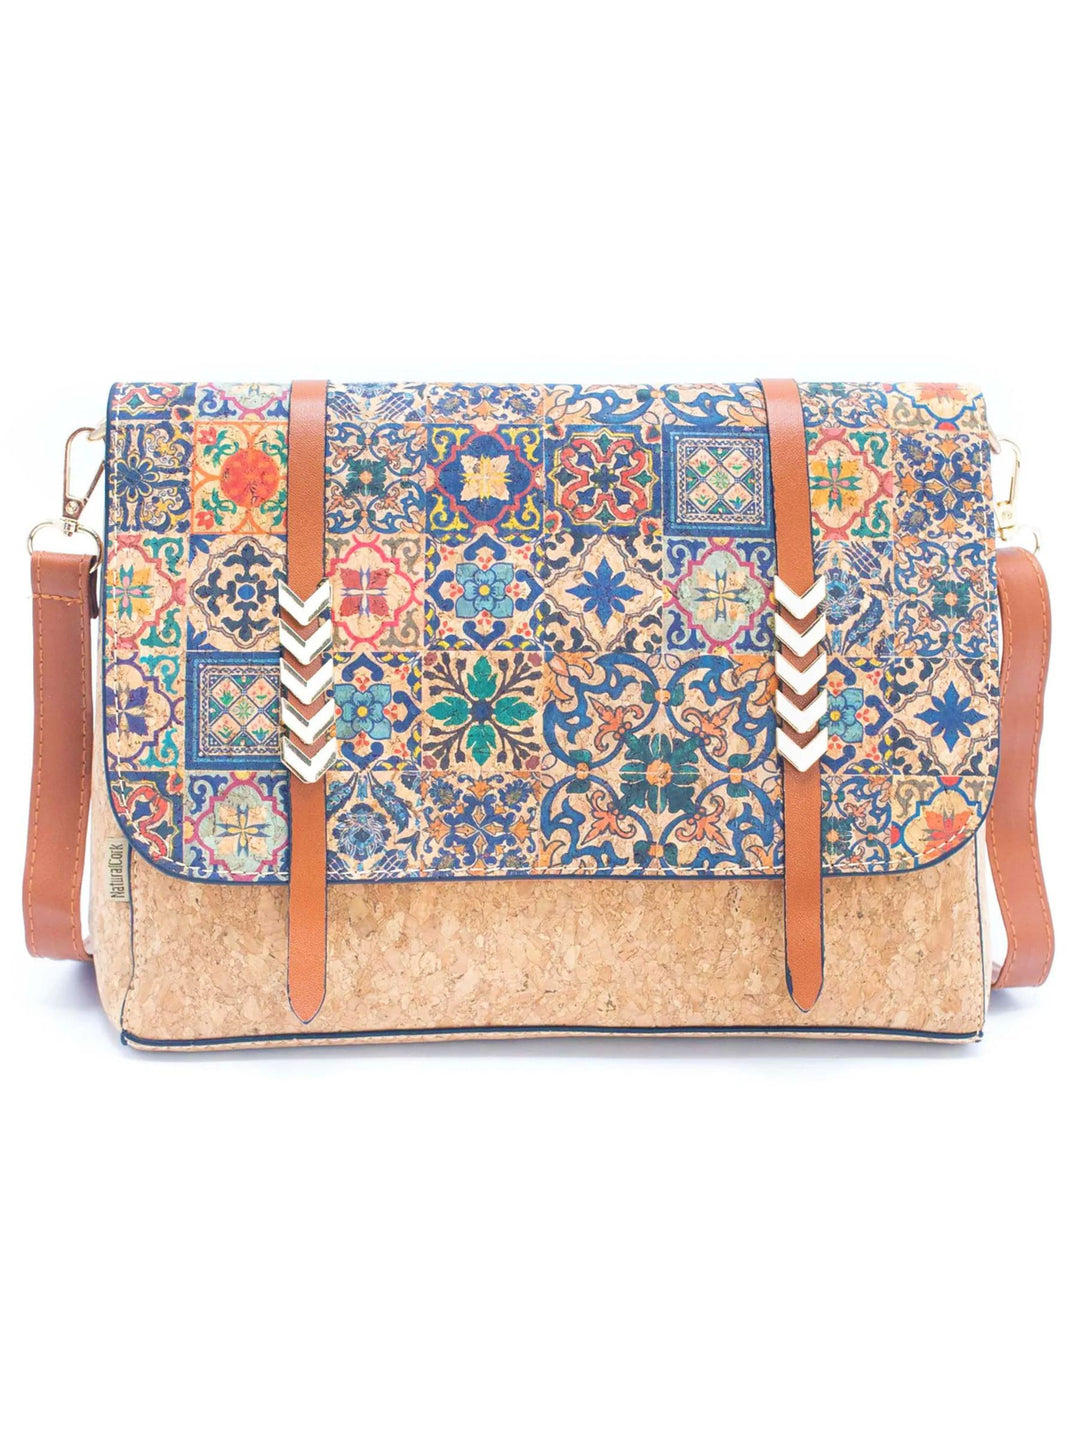 Handmade Women's Genuine Leather Handbags Designer Cross Shoulder Bag Sale for Women, Brown